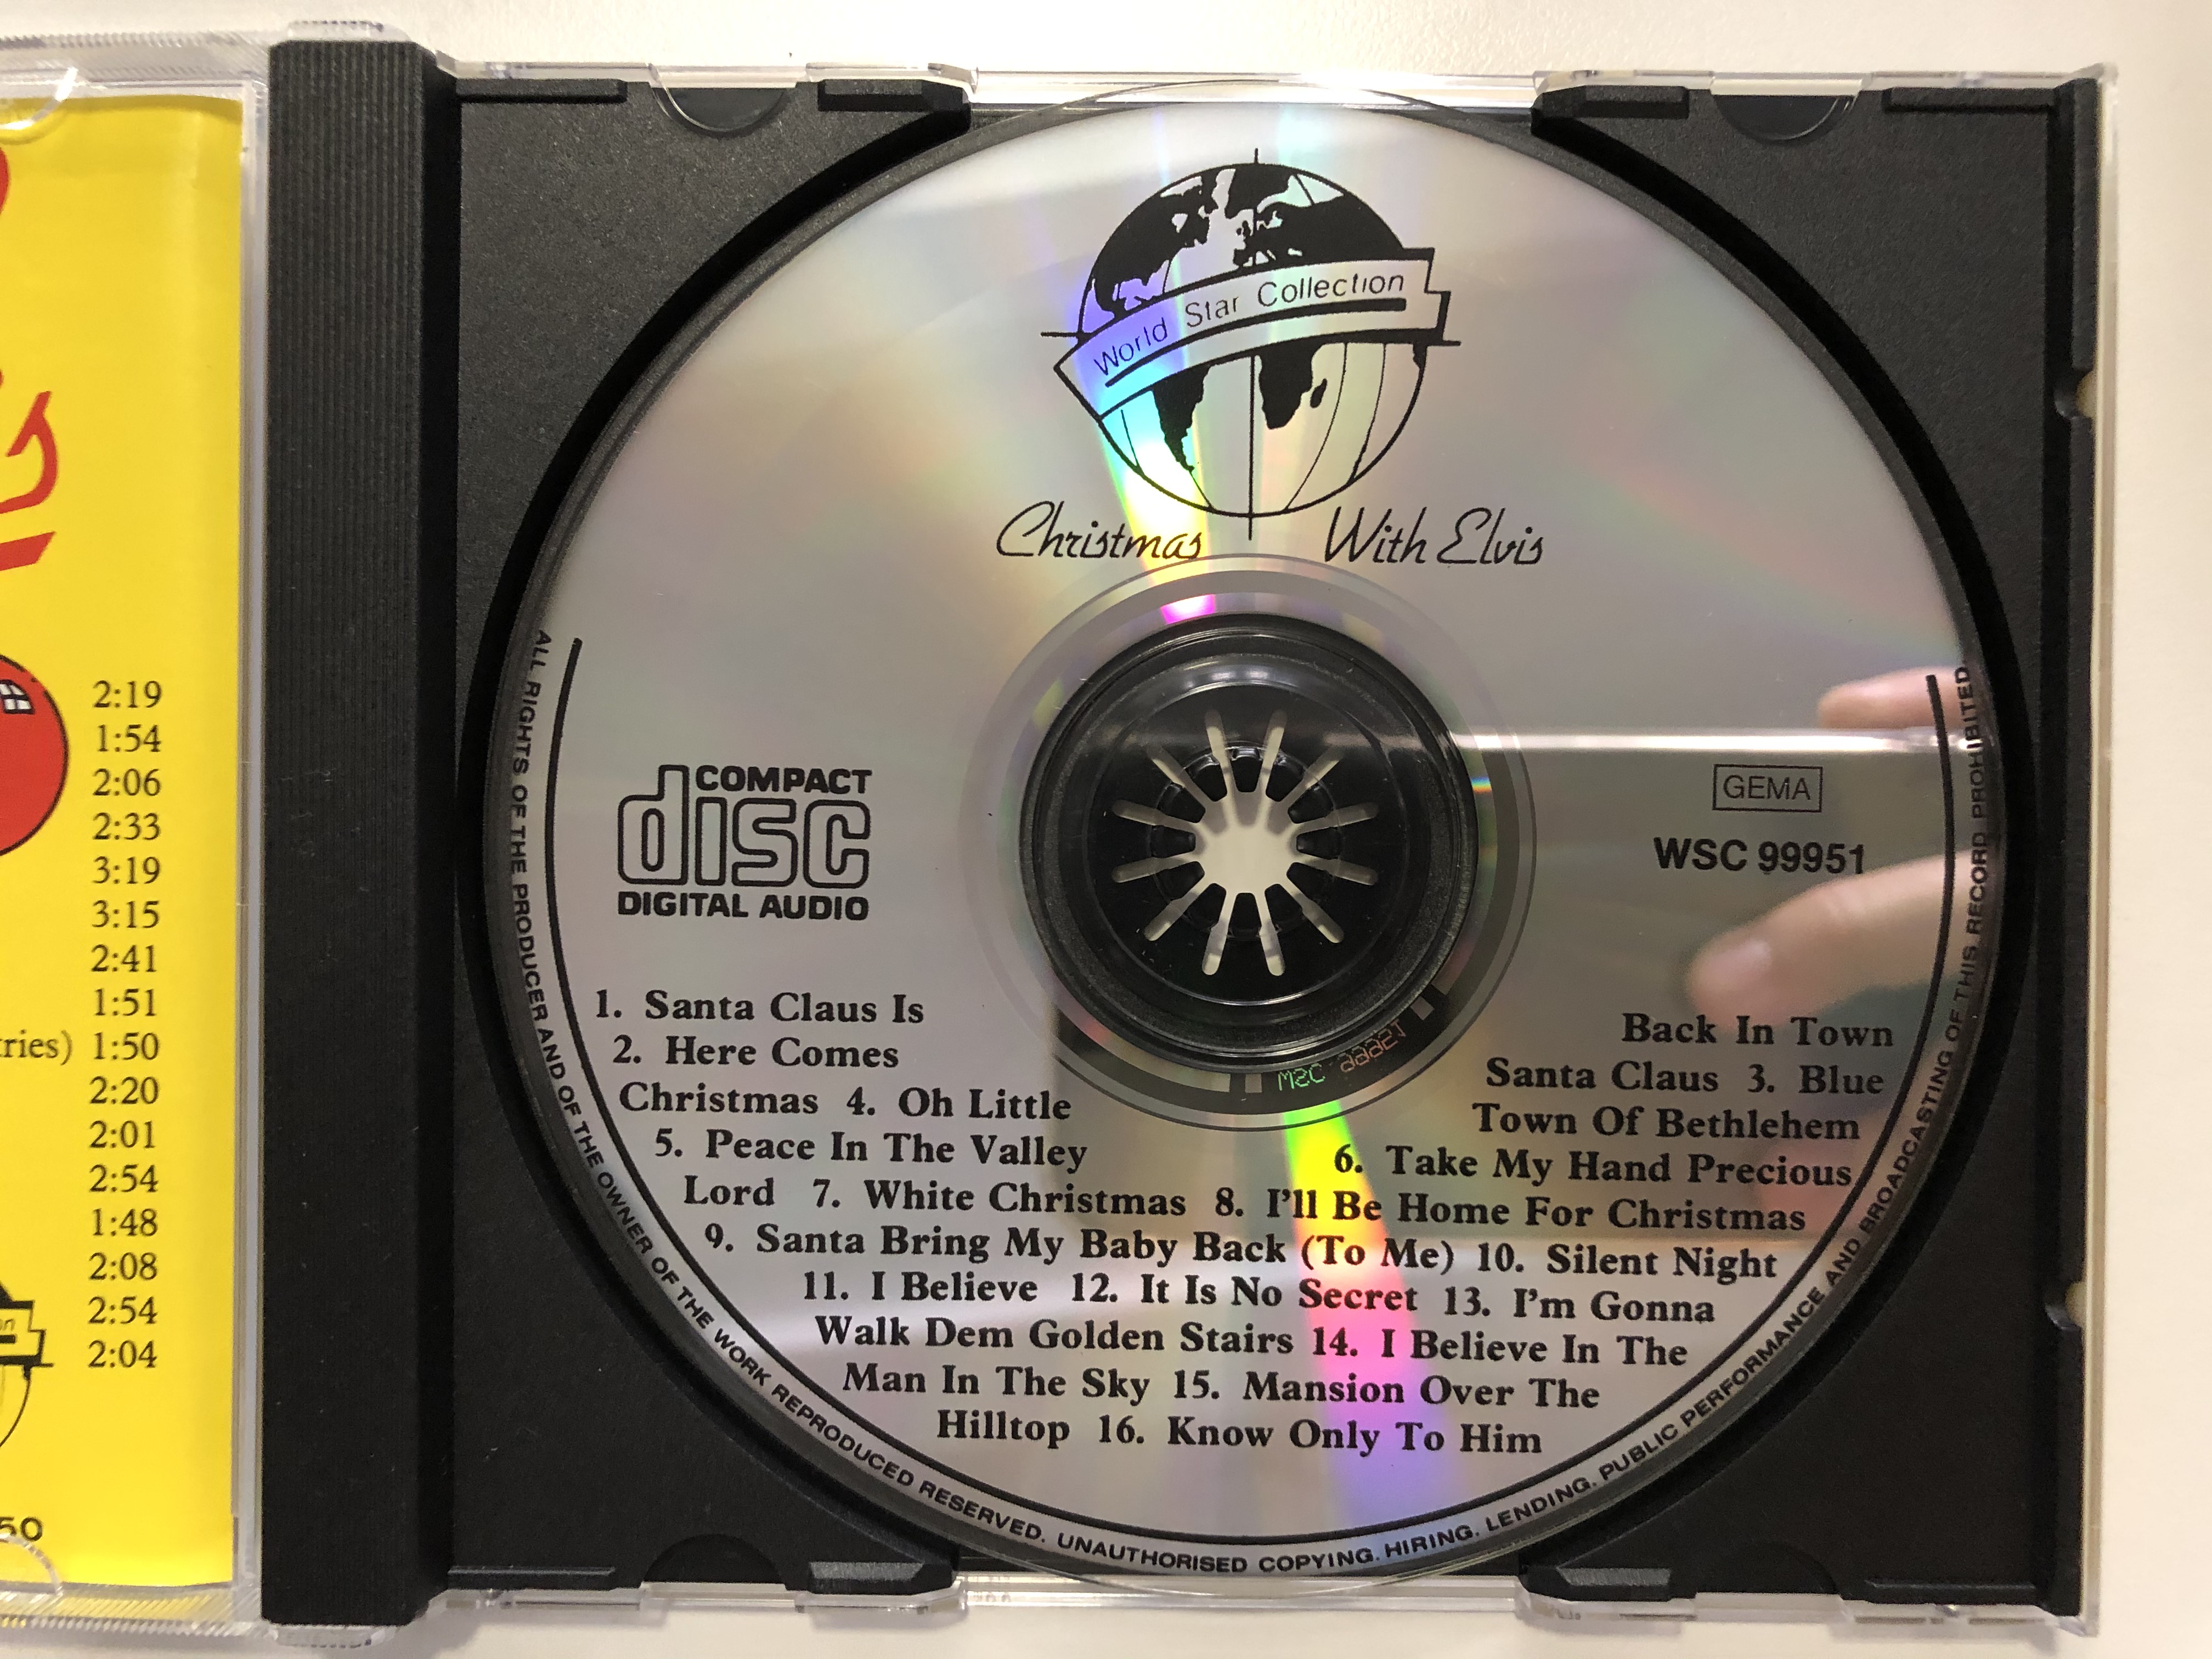 elvis-presley-christmas-with-elvis-world-star-collection-audio-cd-1989-wsc-99951-3-.jpg